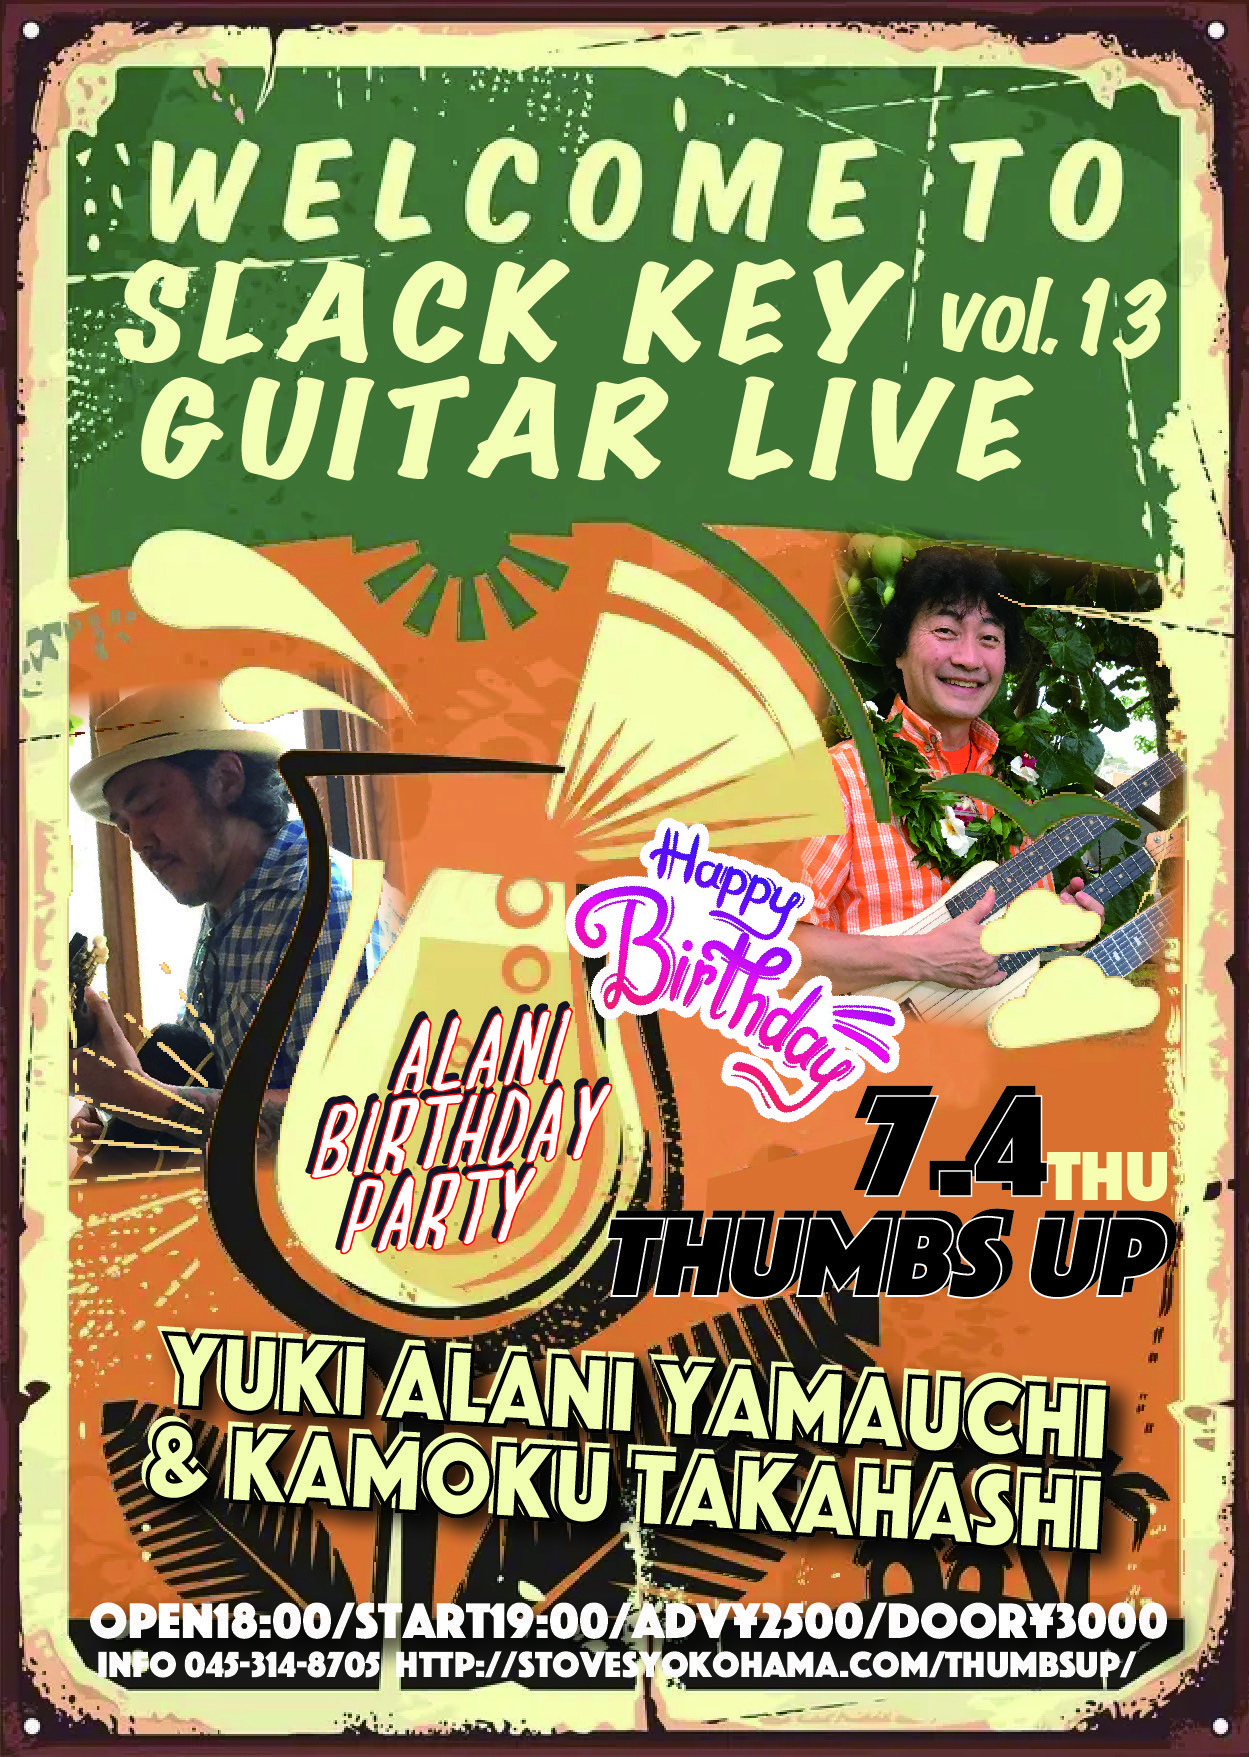 神奈川 Slack Key Guitar Live Vol. 13 ALANI BIRTHDAY PARTY @ Thumbs Up | 名古屋市 | 愛知県 | 日本